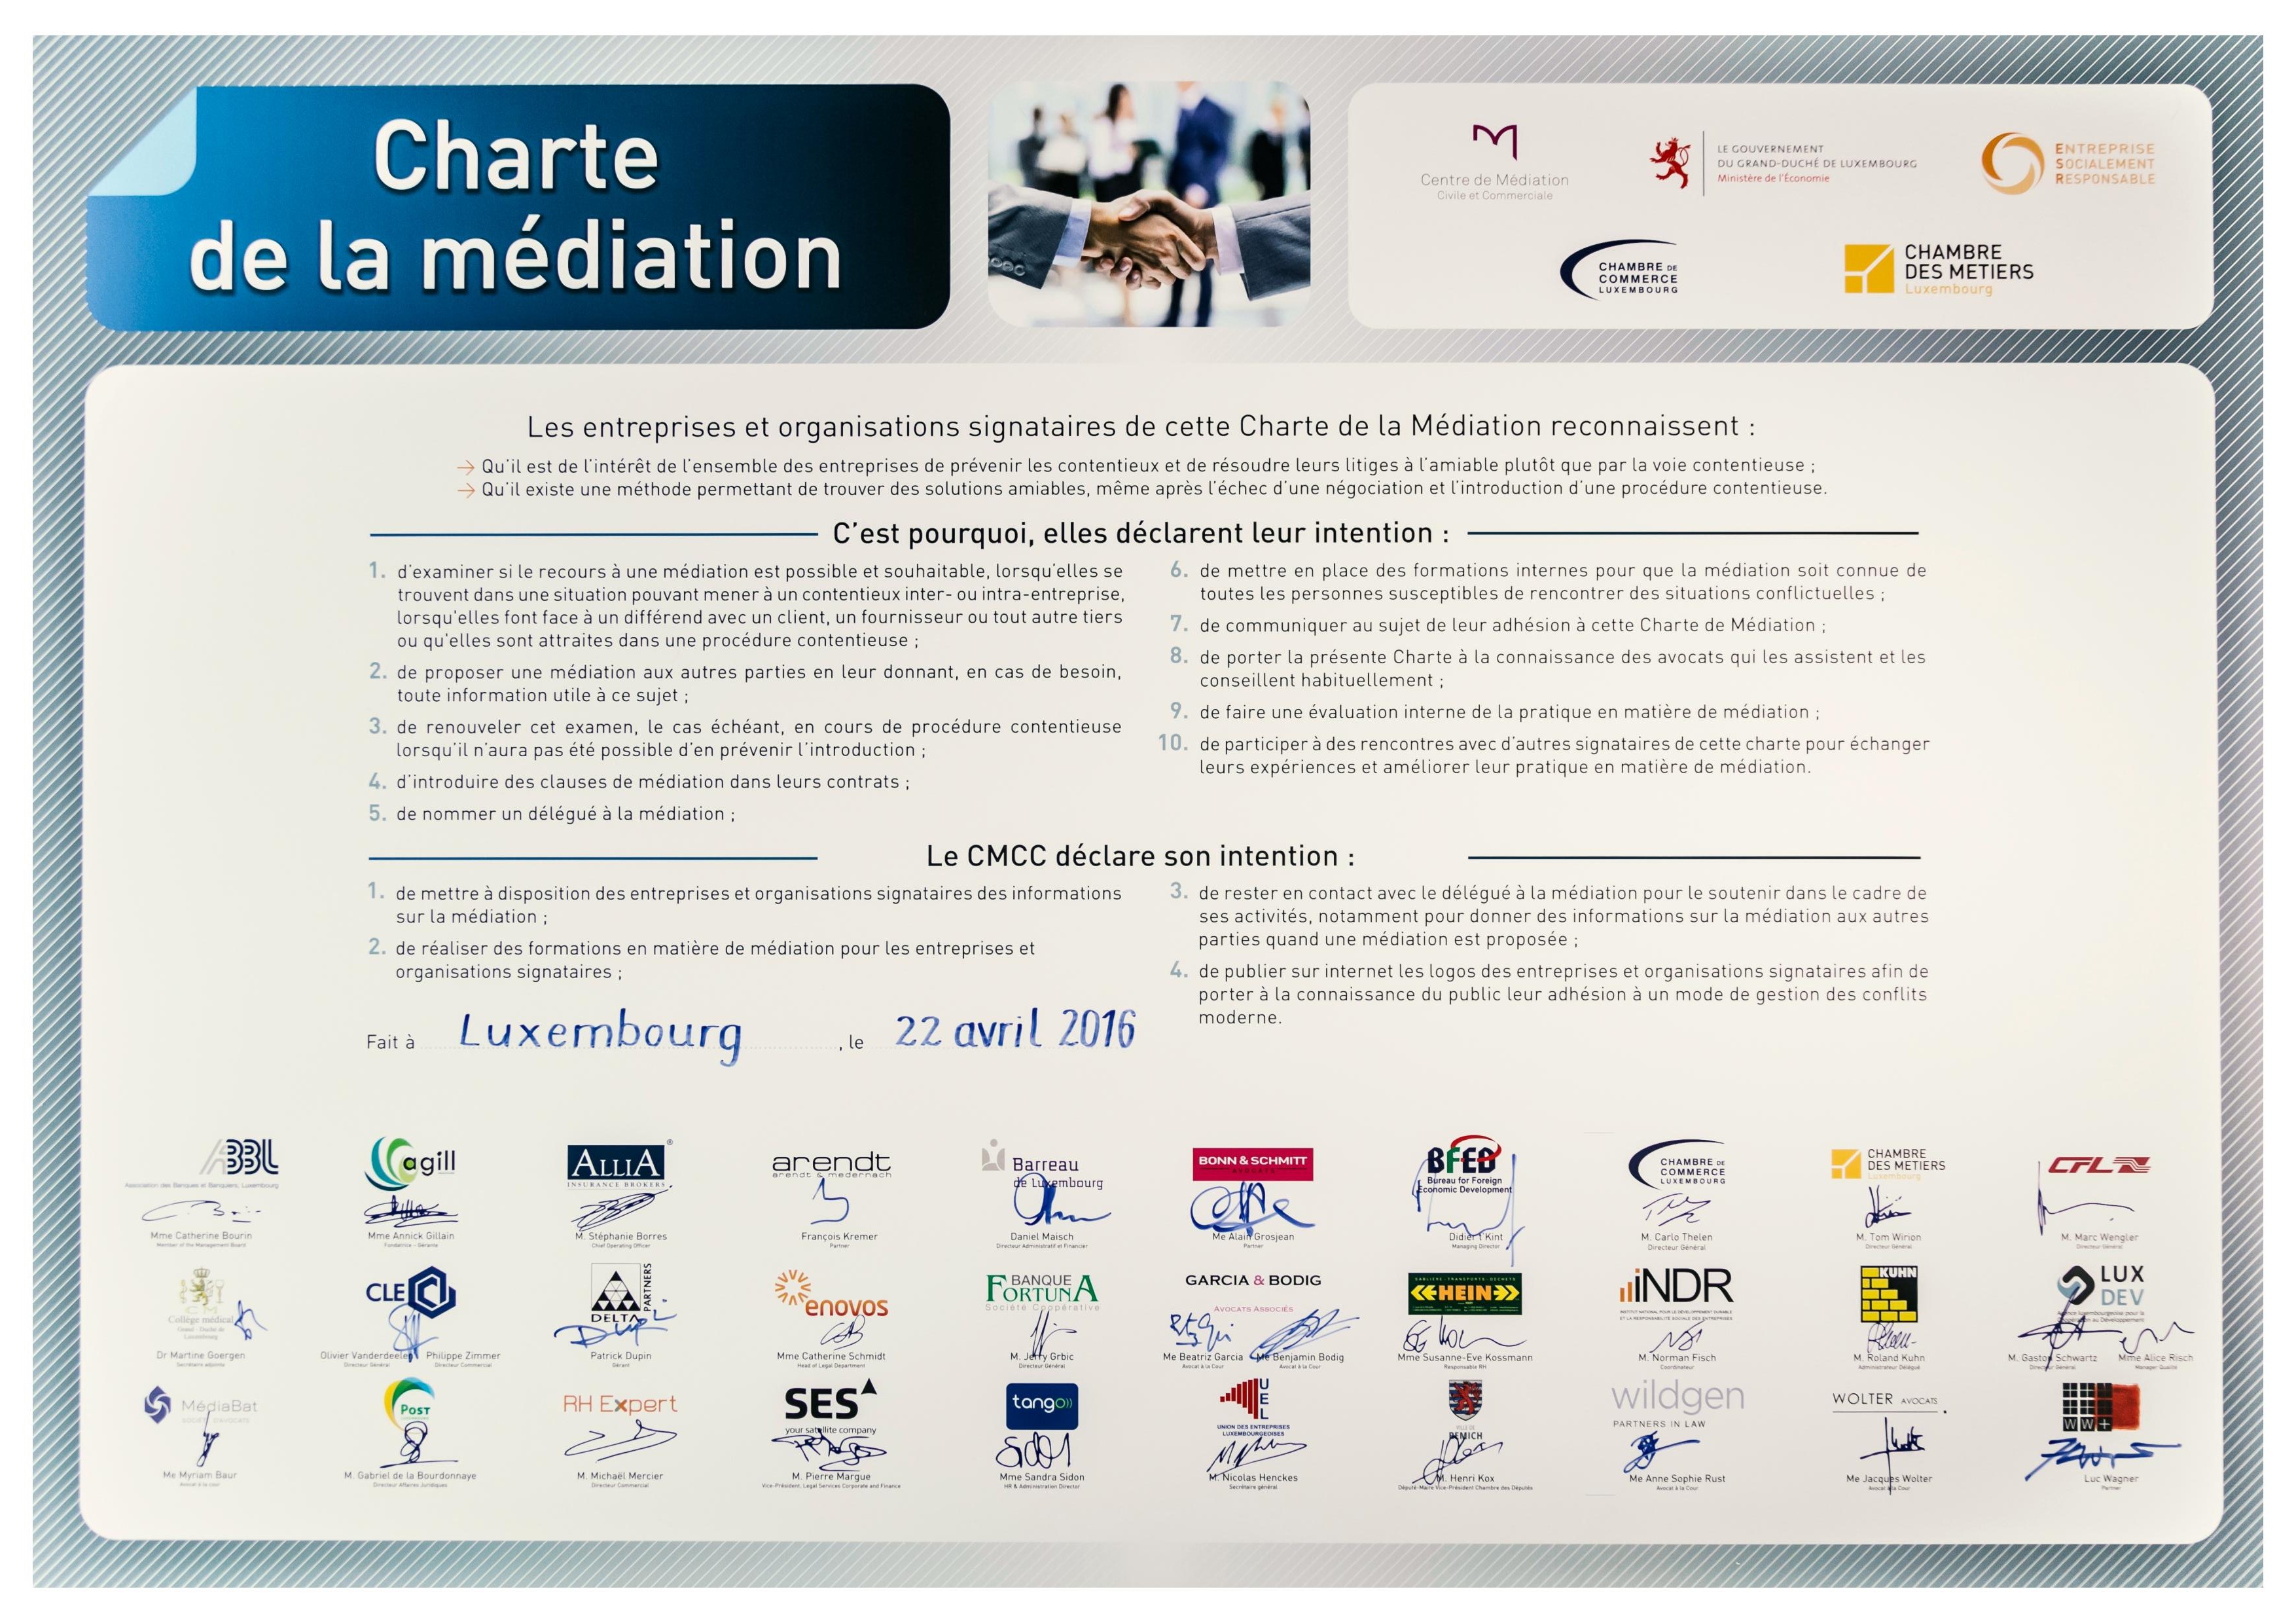  Charte de la Mediation